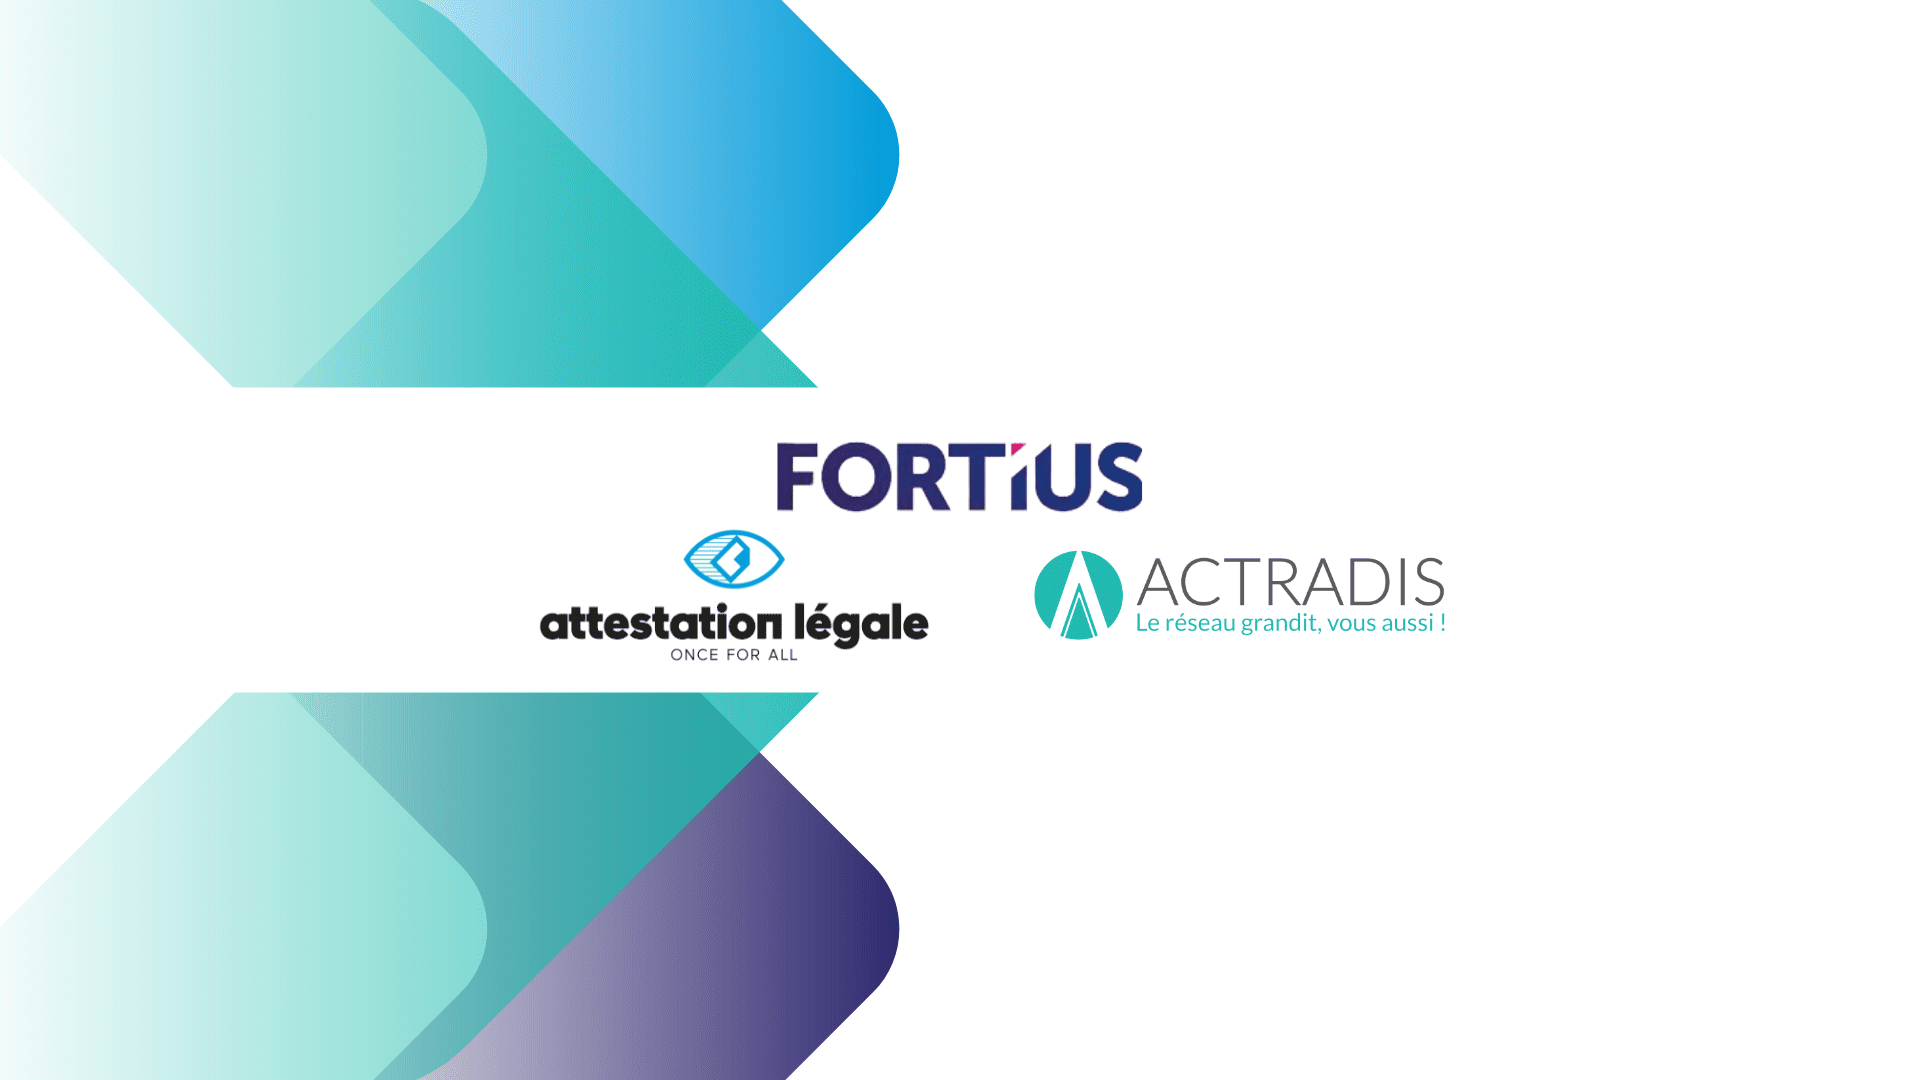 Actradis Fortius Attestation légale